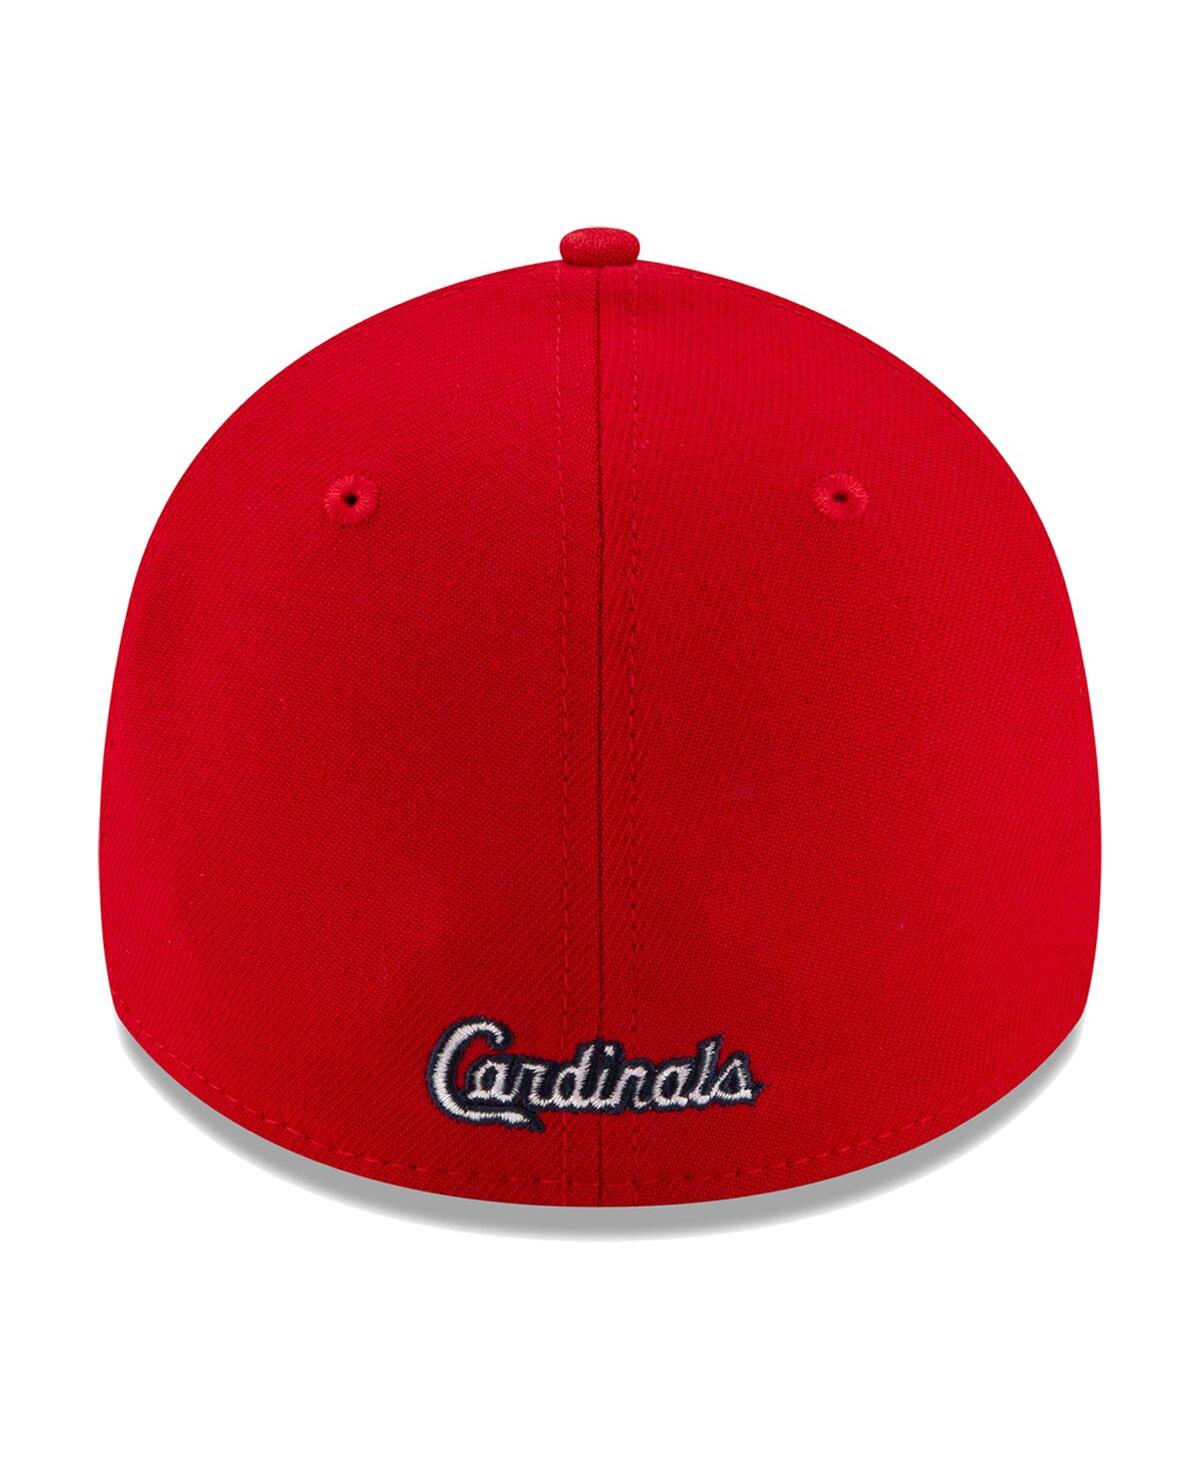 Shop New Era Men's  Red St. Louis Cardinals Classic 39thirty Flex Hat